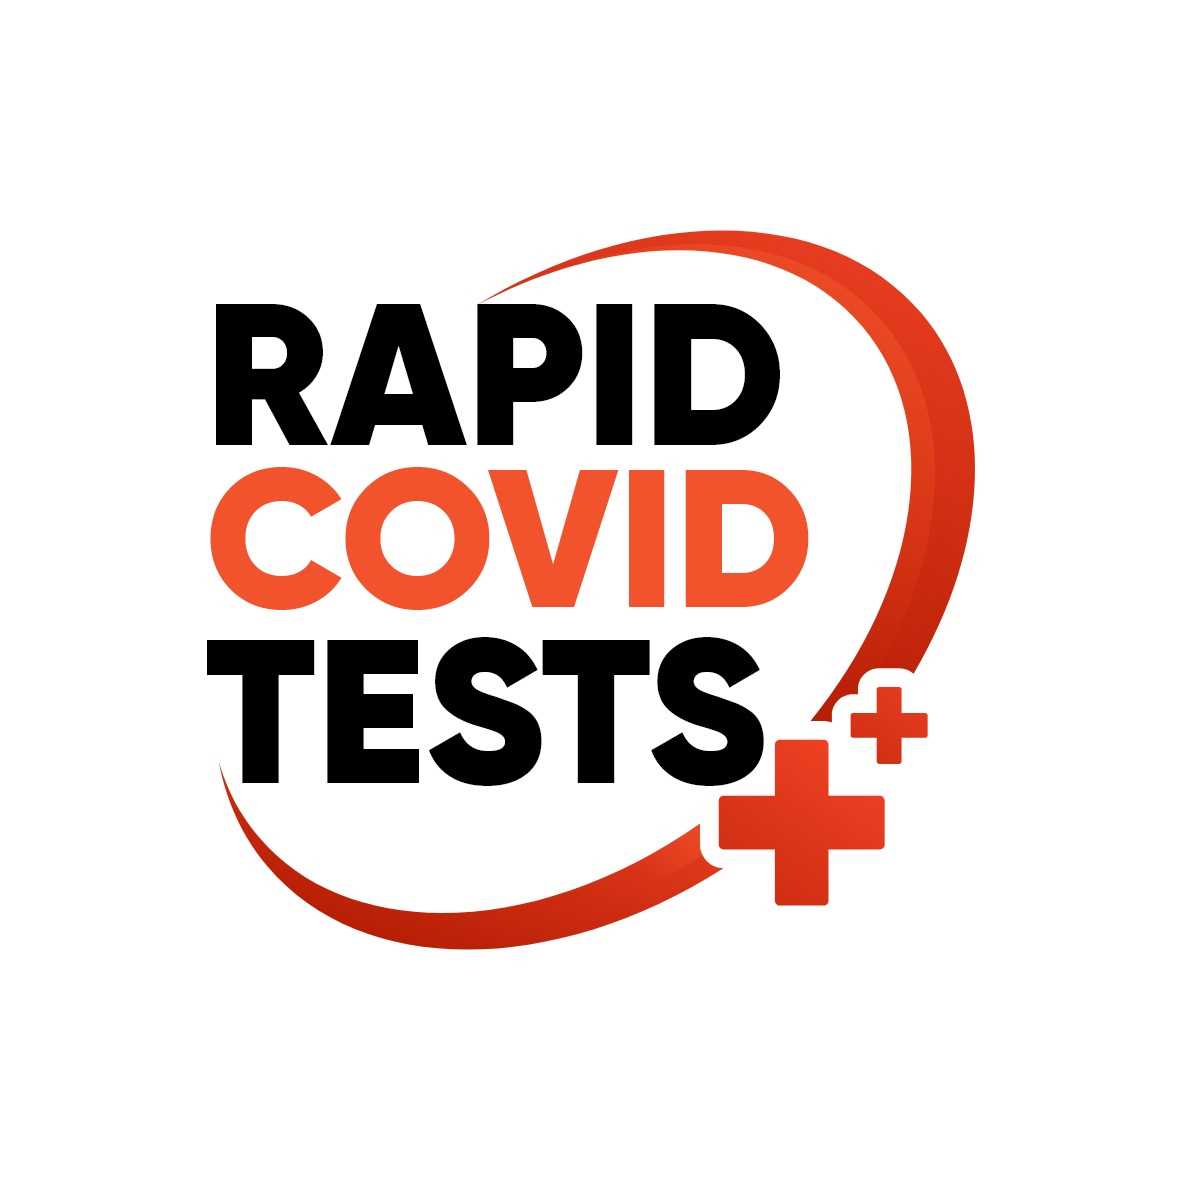 Rapid Covid Tests